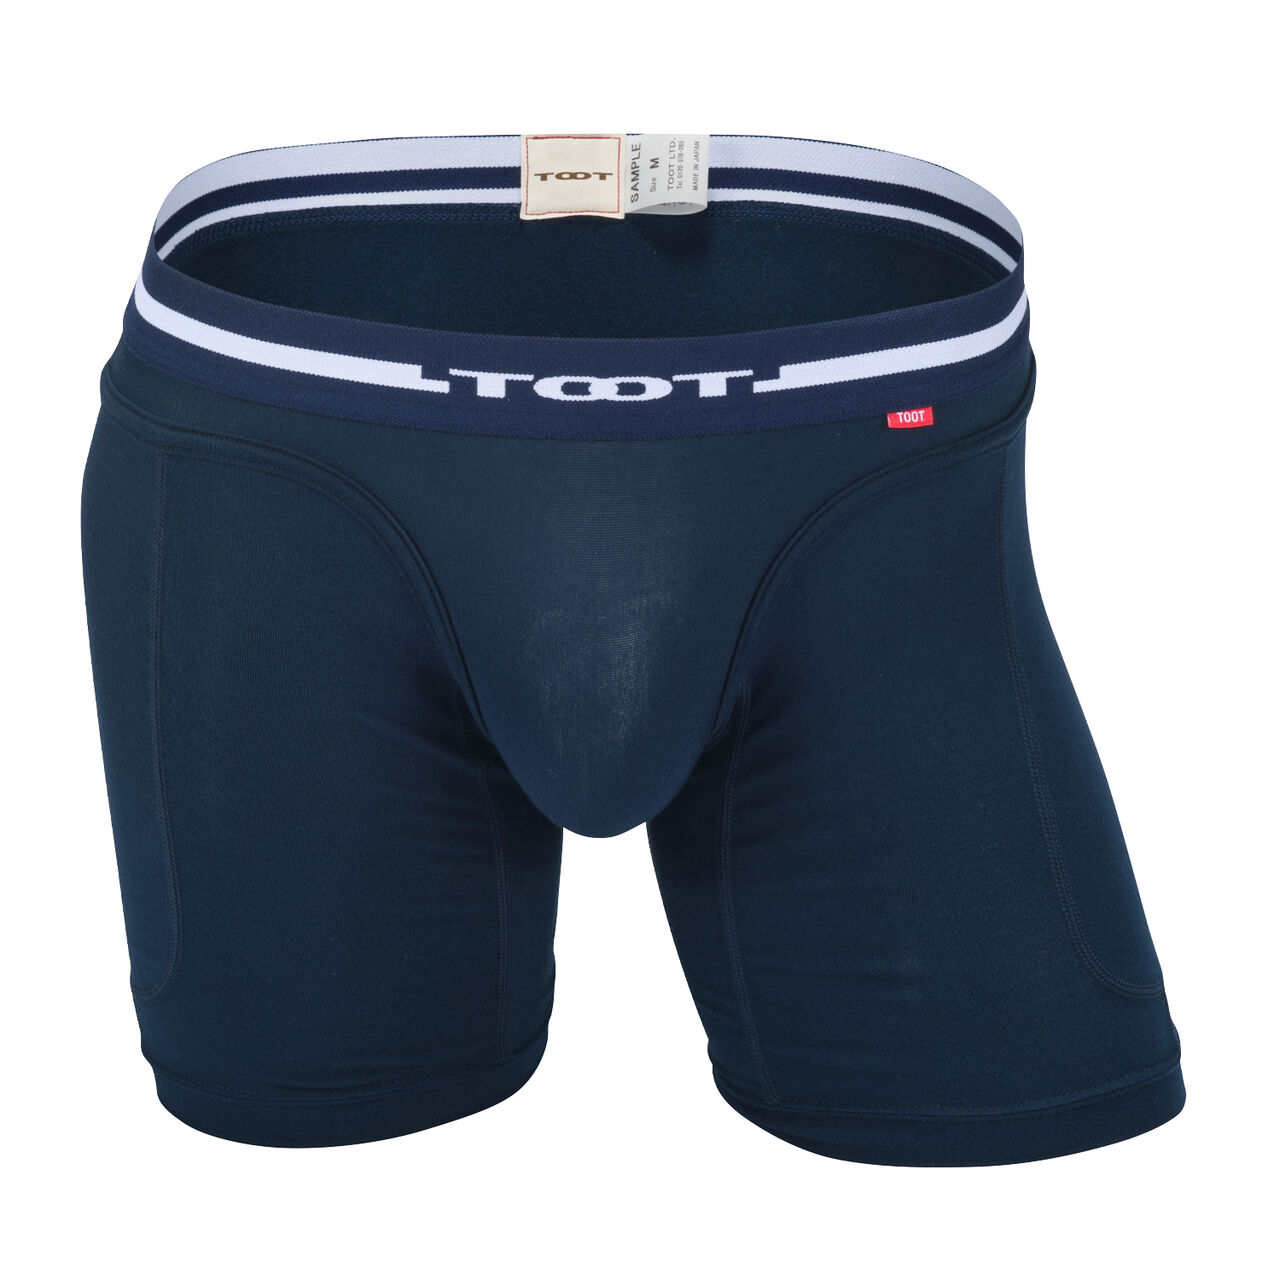 FuTuR=IST Long Boxer | Men's Underwear brand TOOT official website